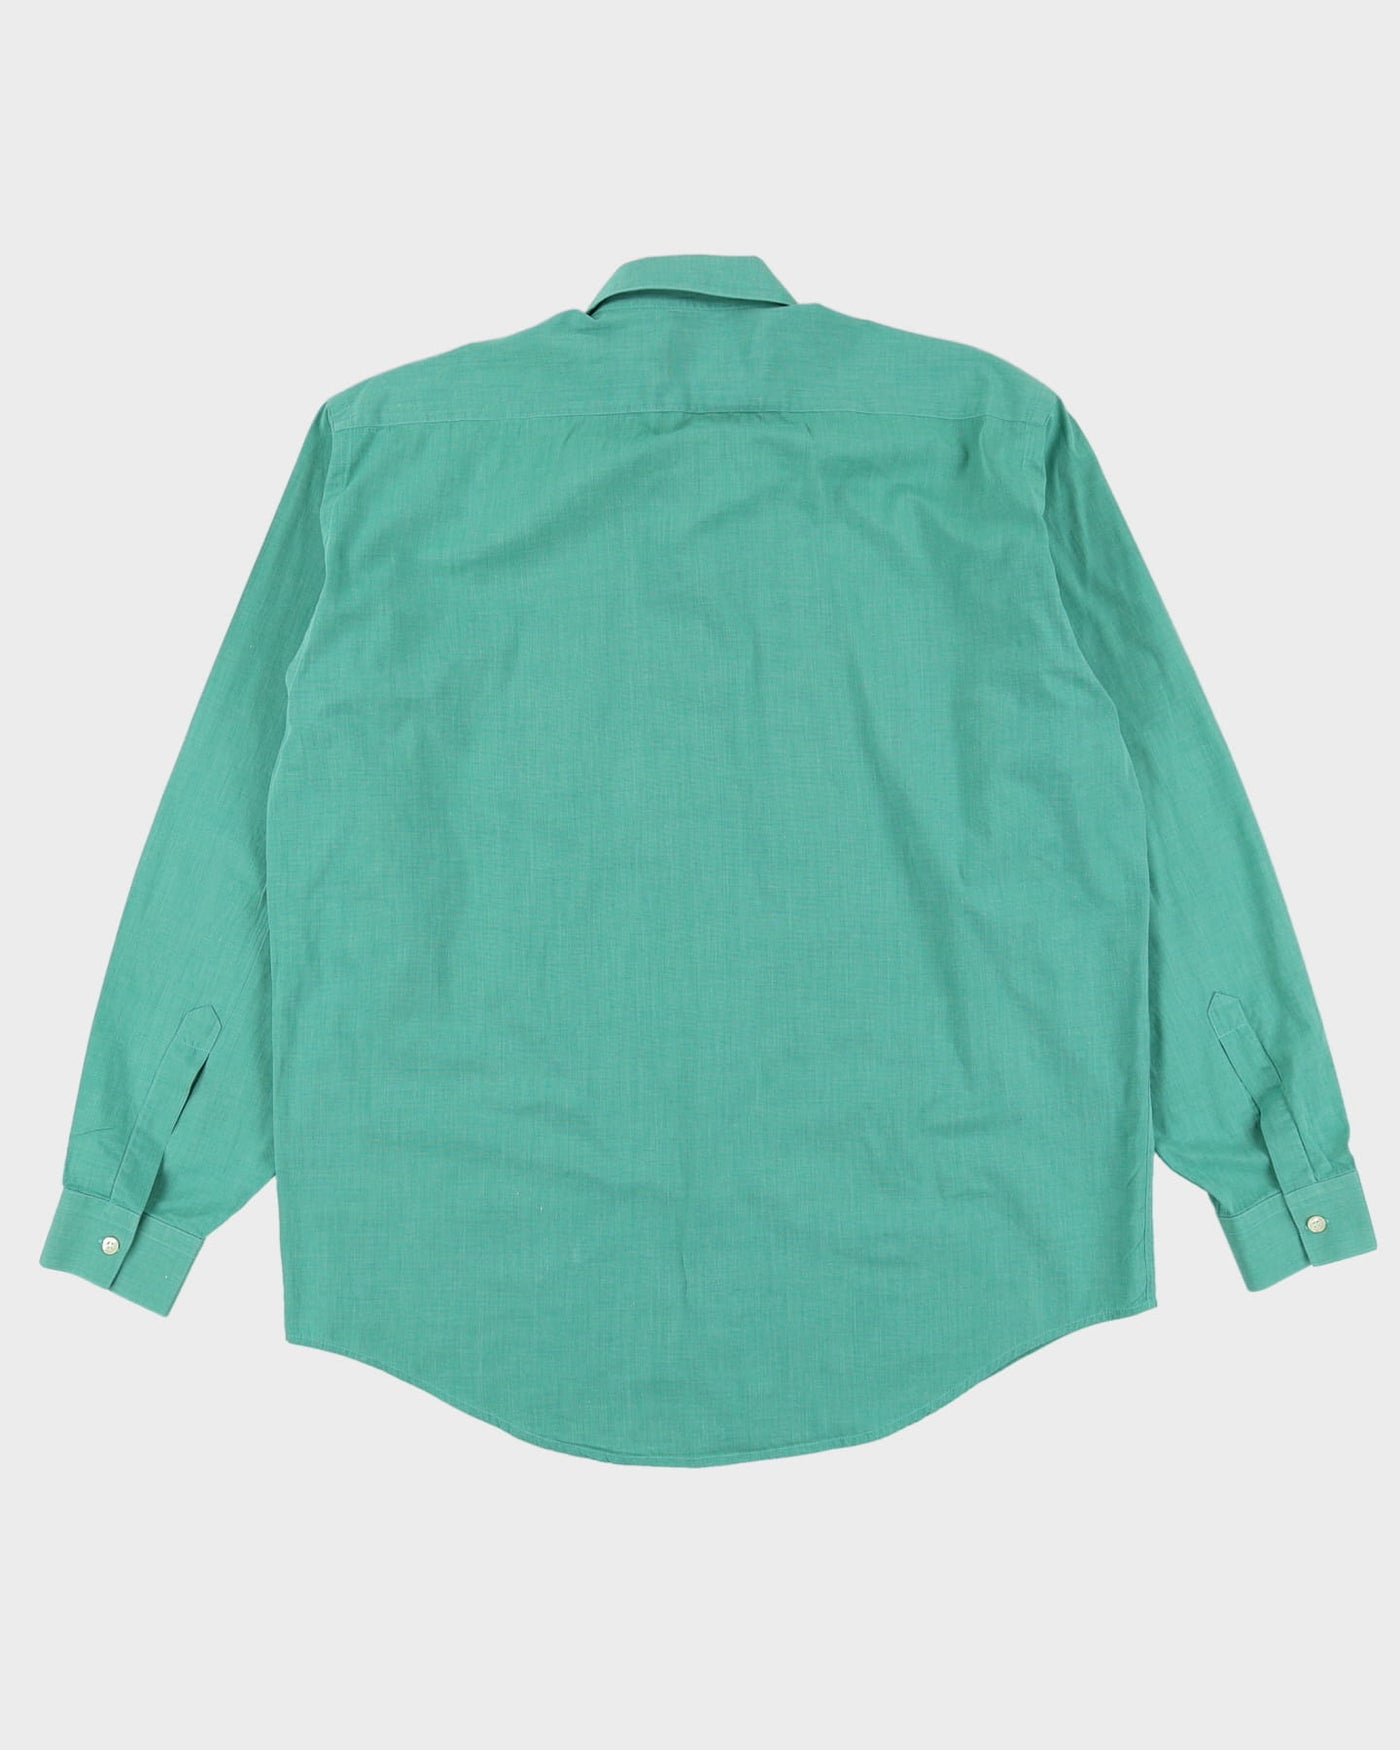 90s V2 By Versace Green Button Up Long Sleeve Shirt - XL